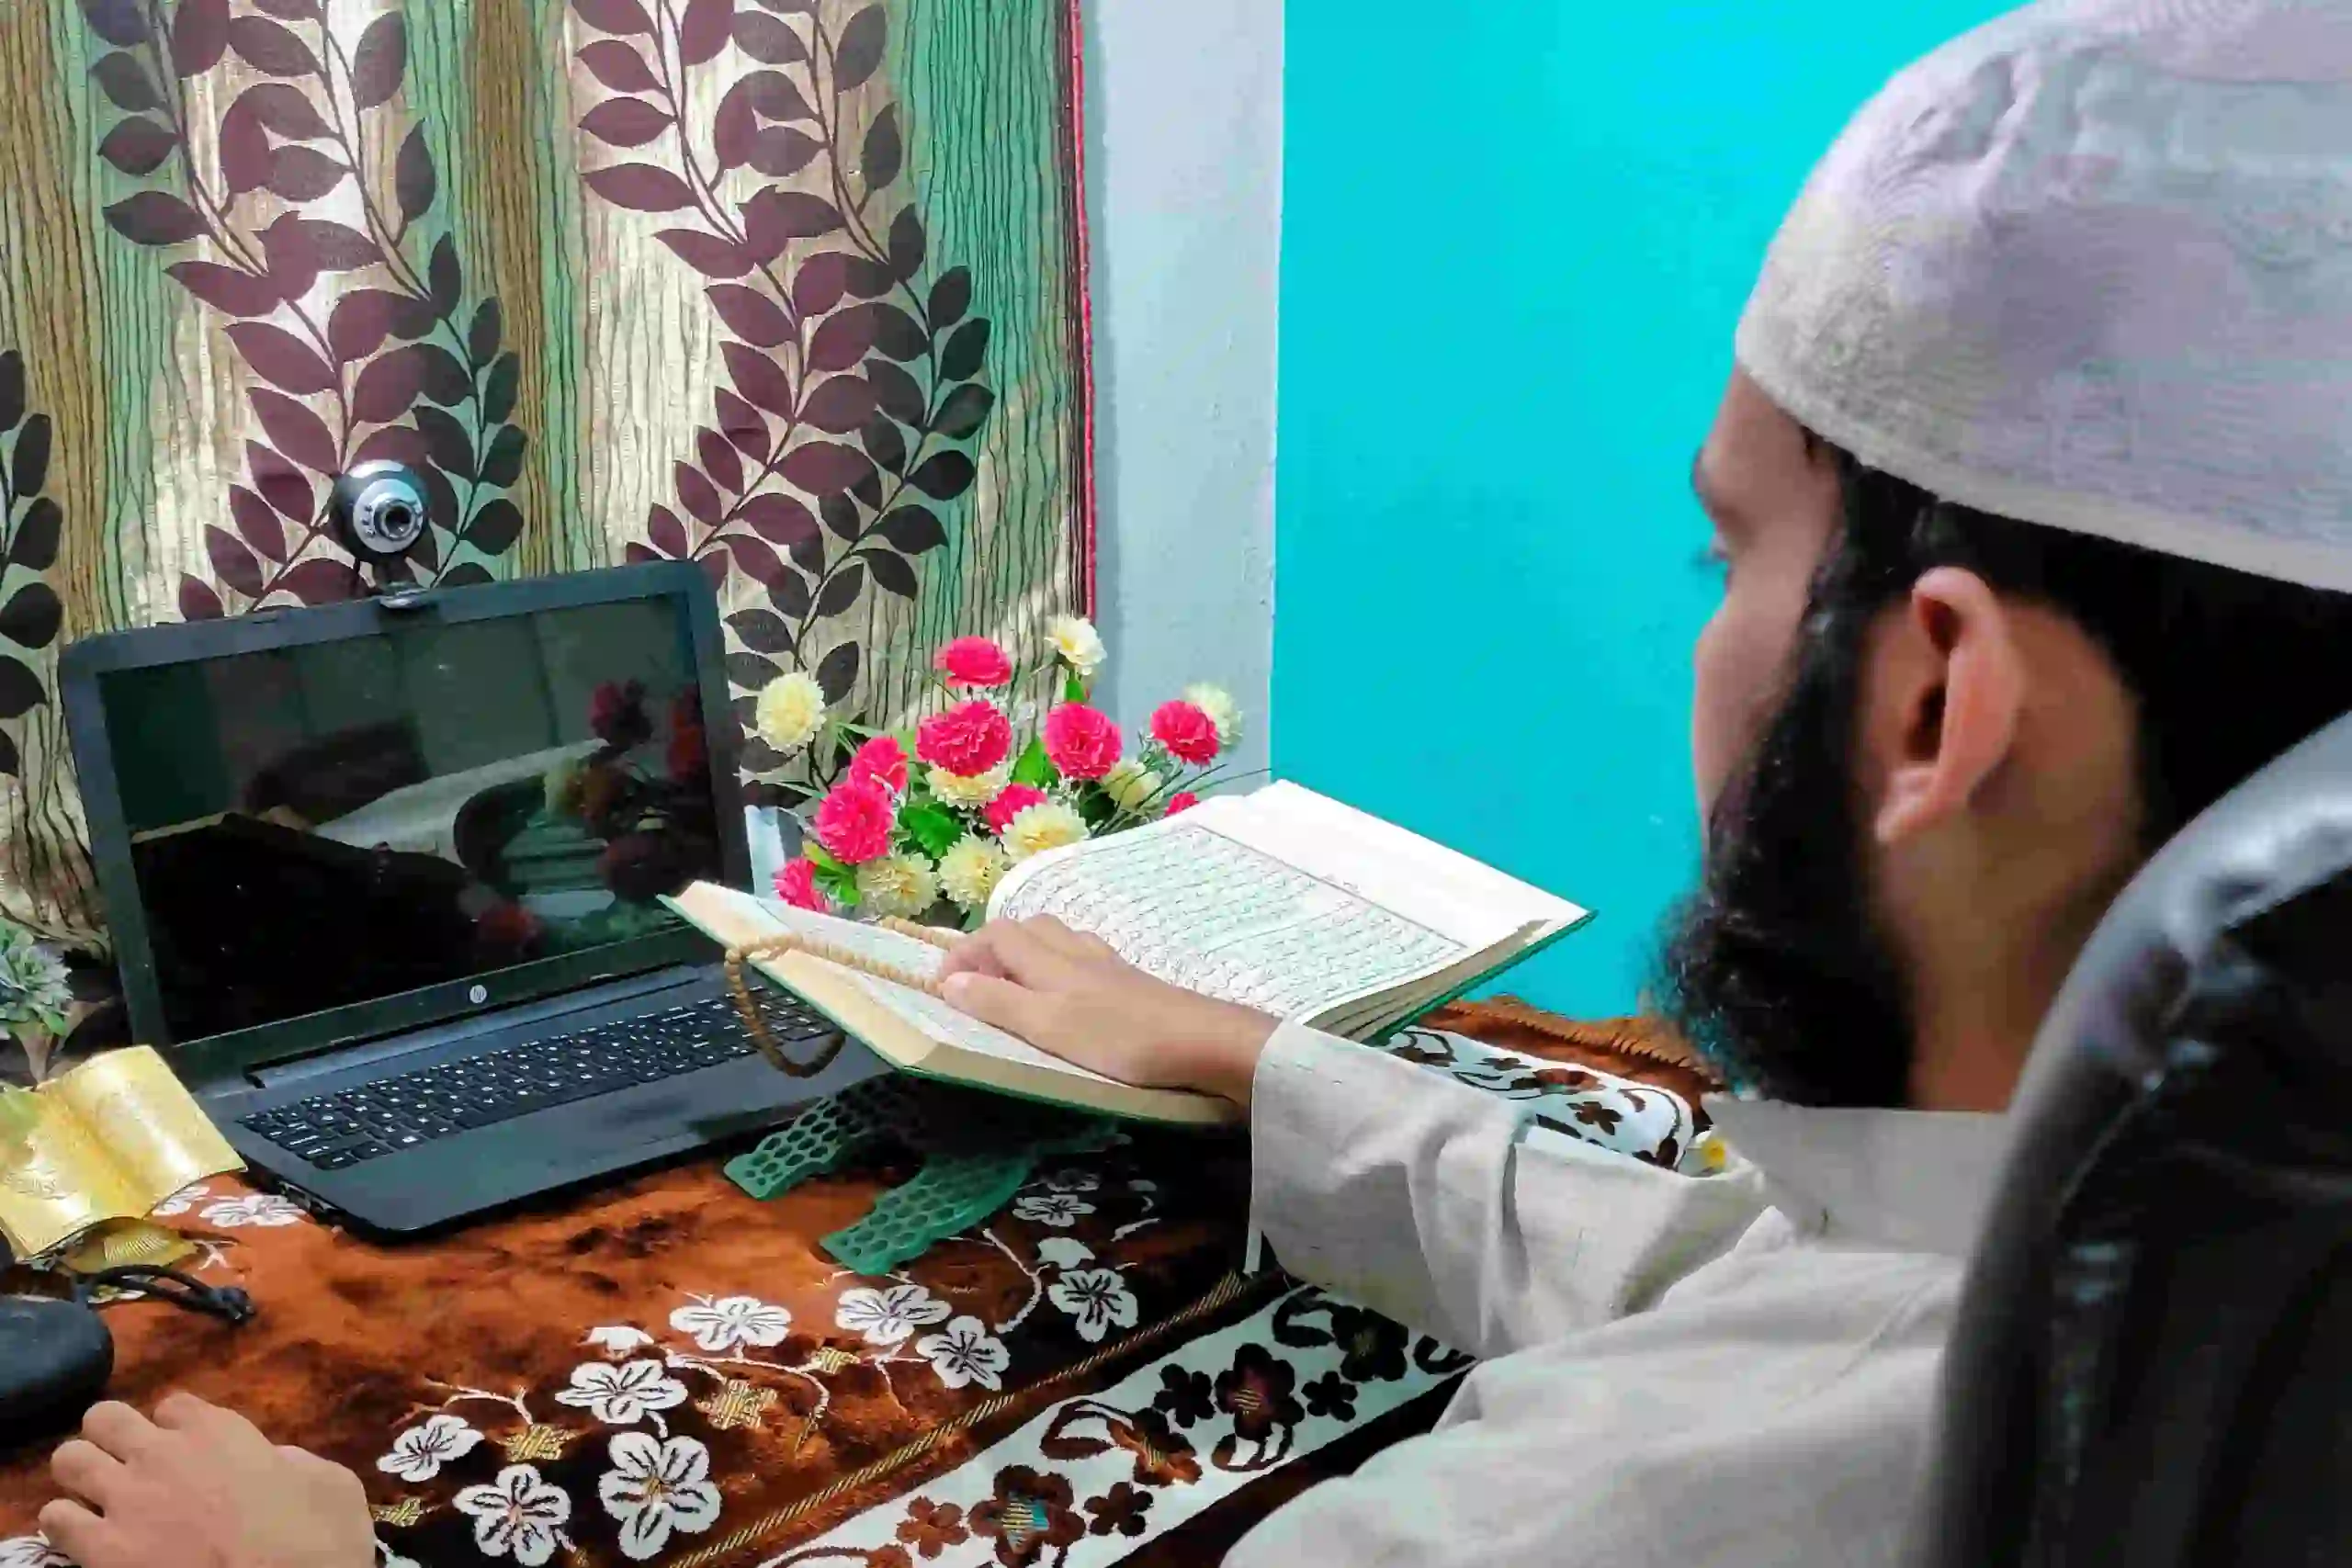 Learn Quranic Arabic Online, Online Quran Lessons